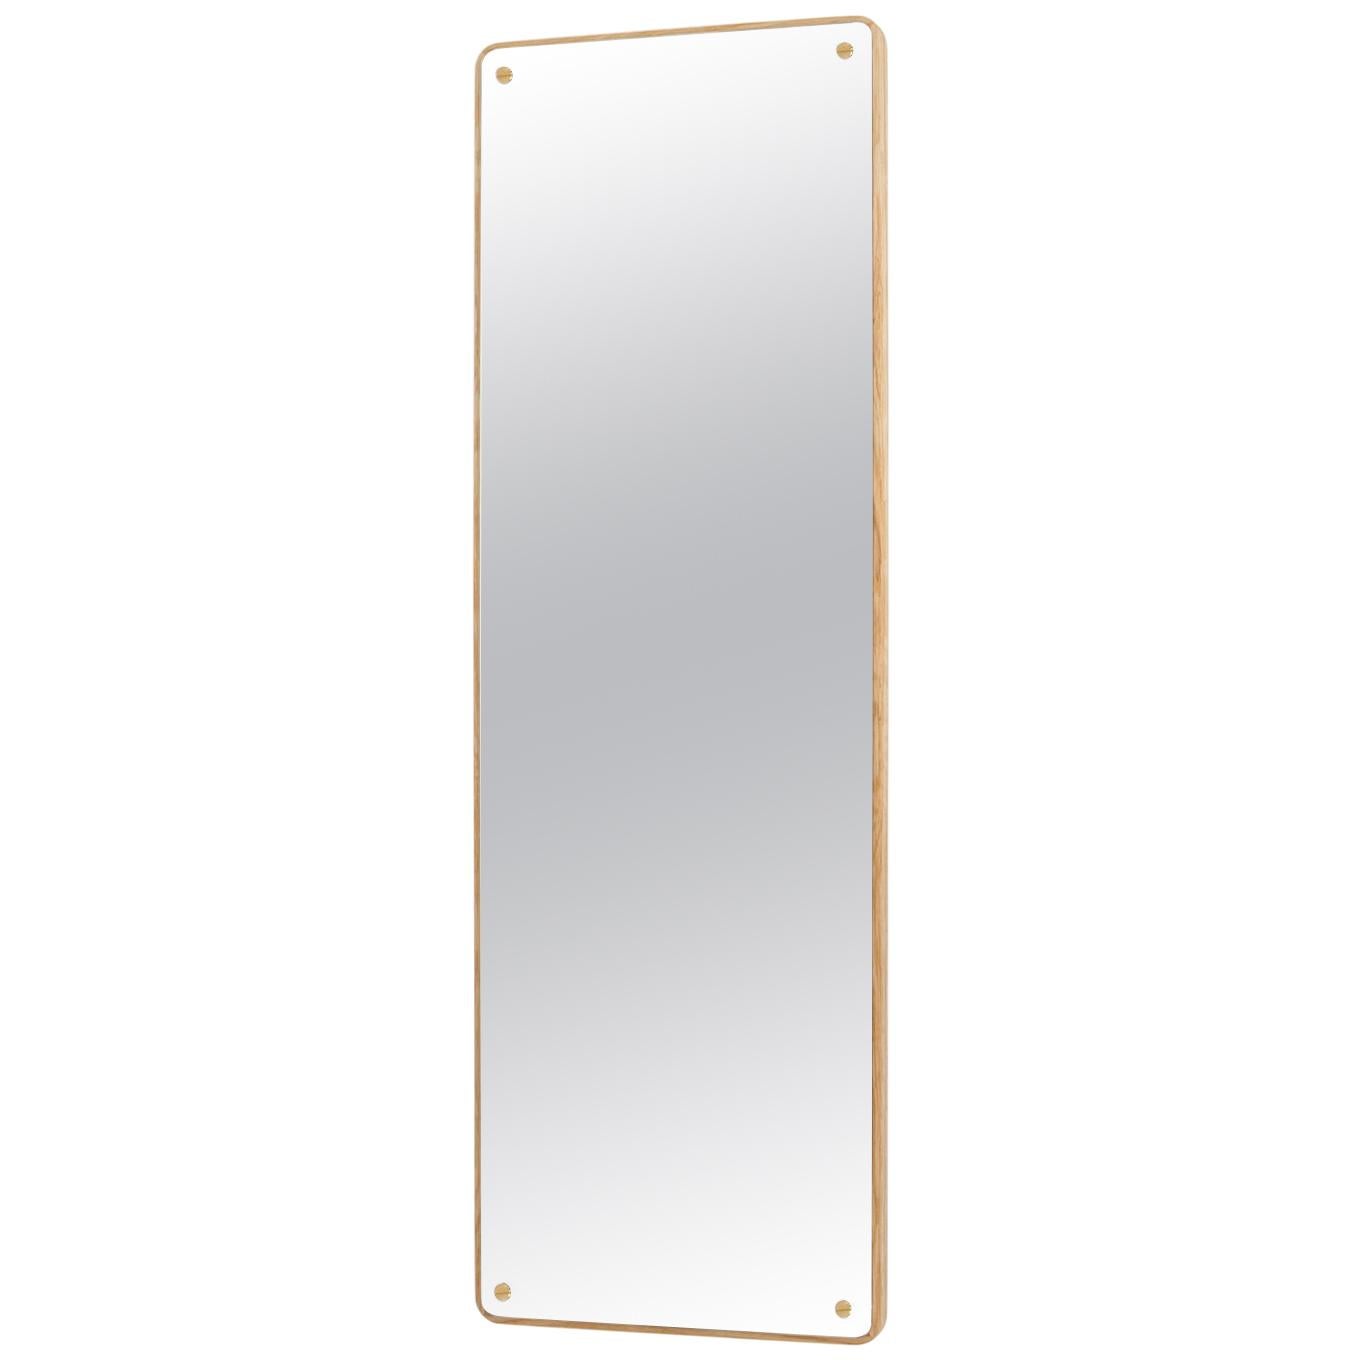 Grand miroir rectangulaire RM-1 de conception contemporaine FRAMA en vente